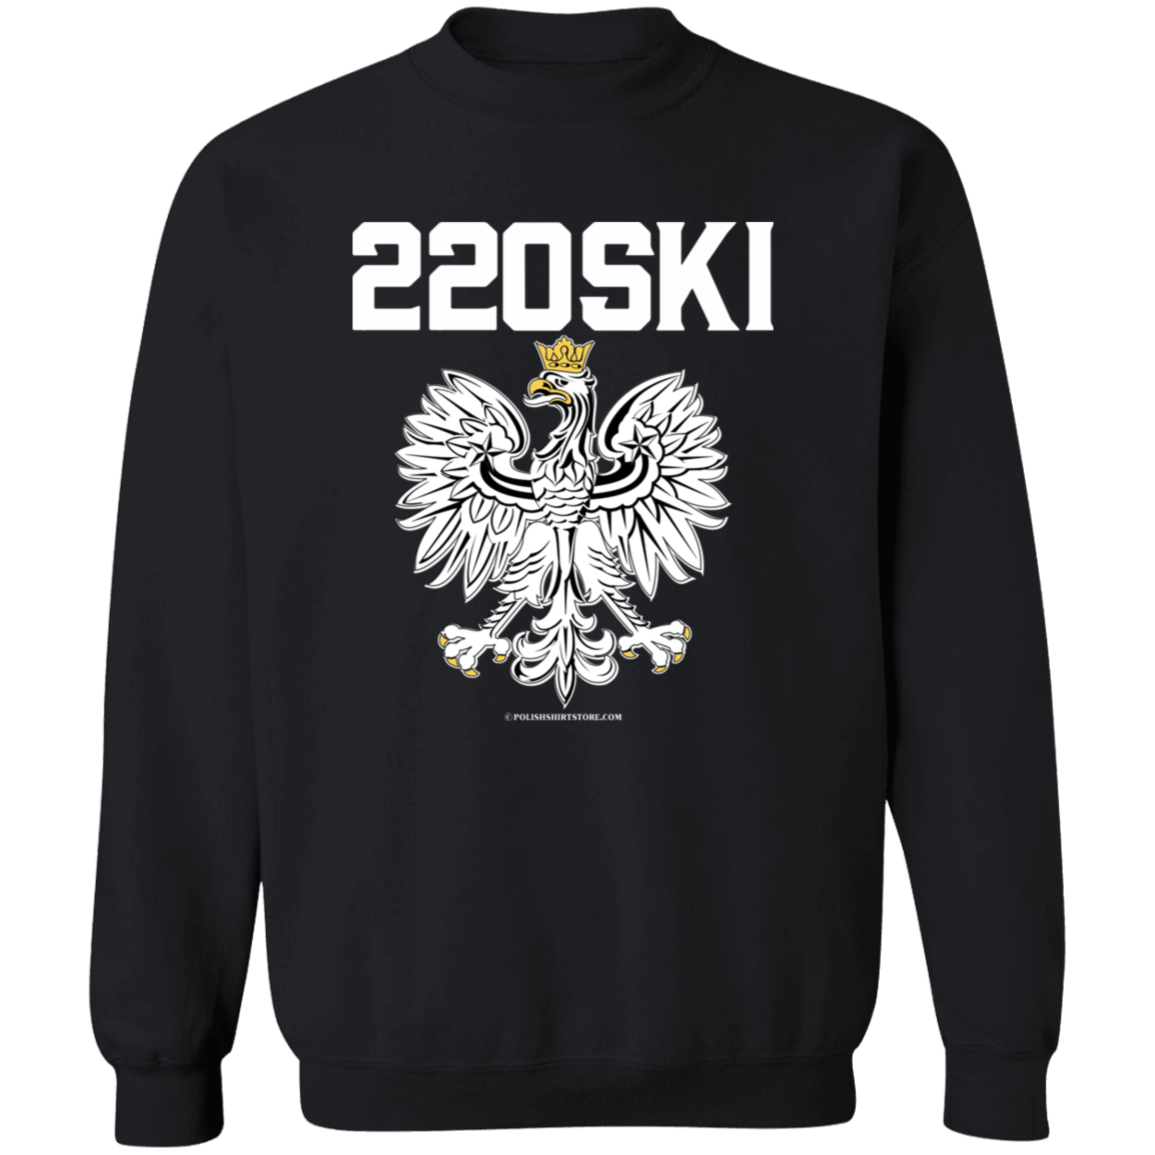 220SKI Apparel CustomCat G180 Crewneck Pullover Sweatshirt Black S